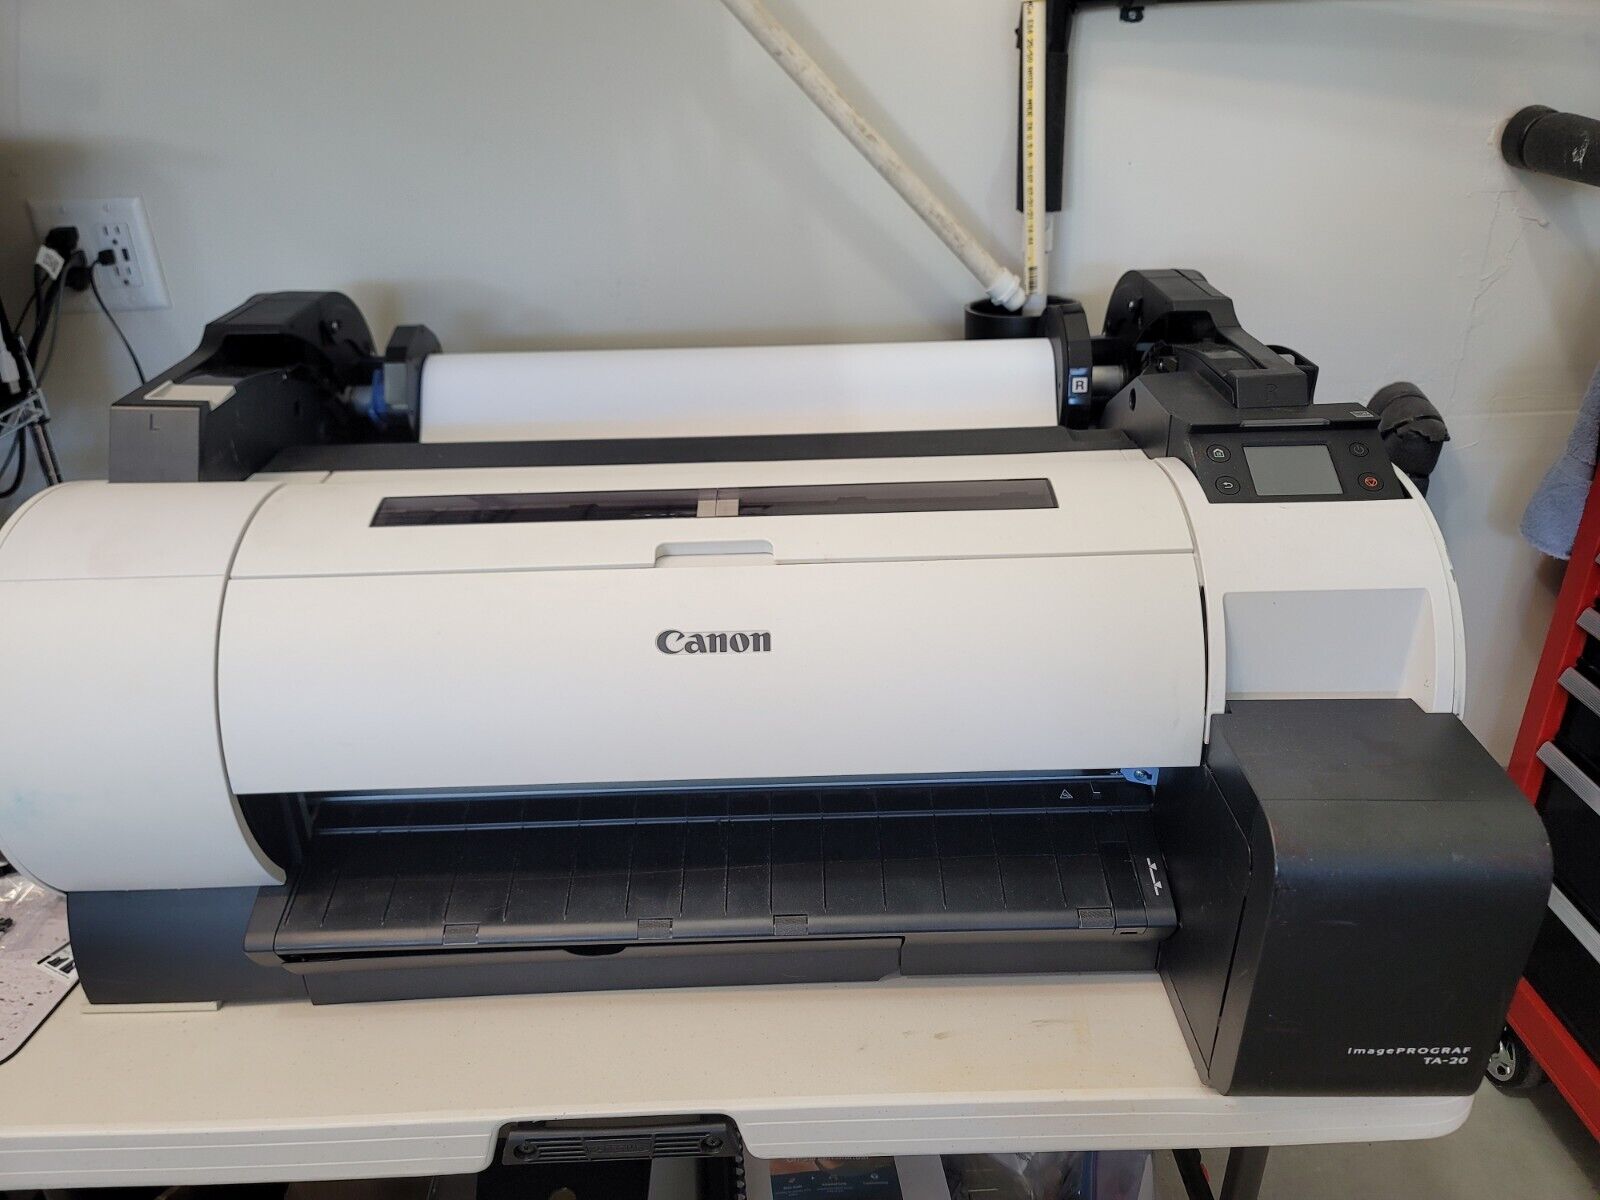 Canon imagePROGRAF TA-20 Large Format Printer - White/Black